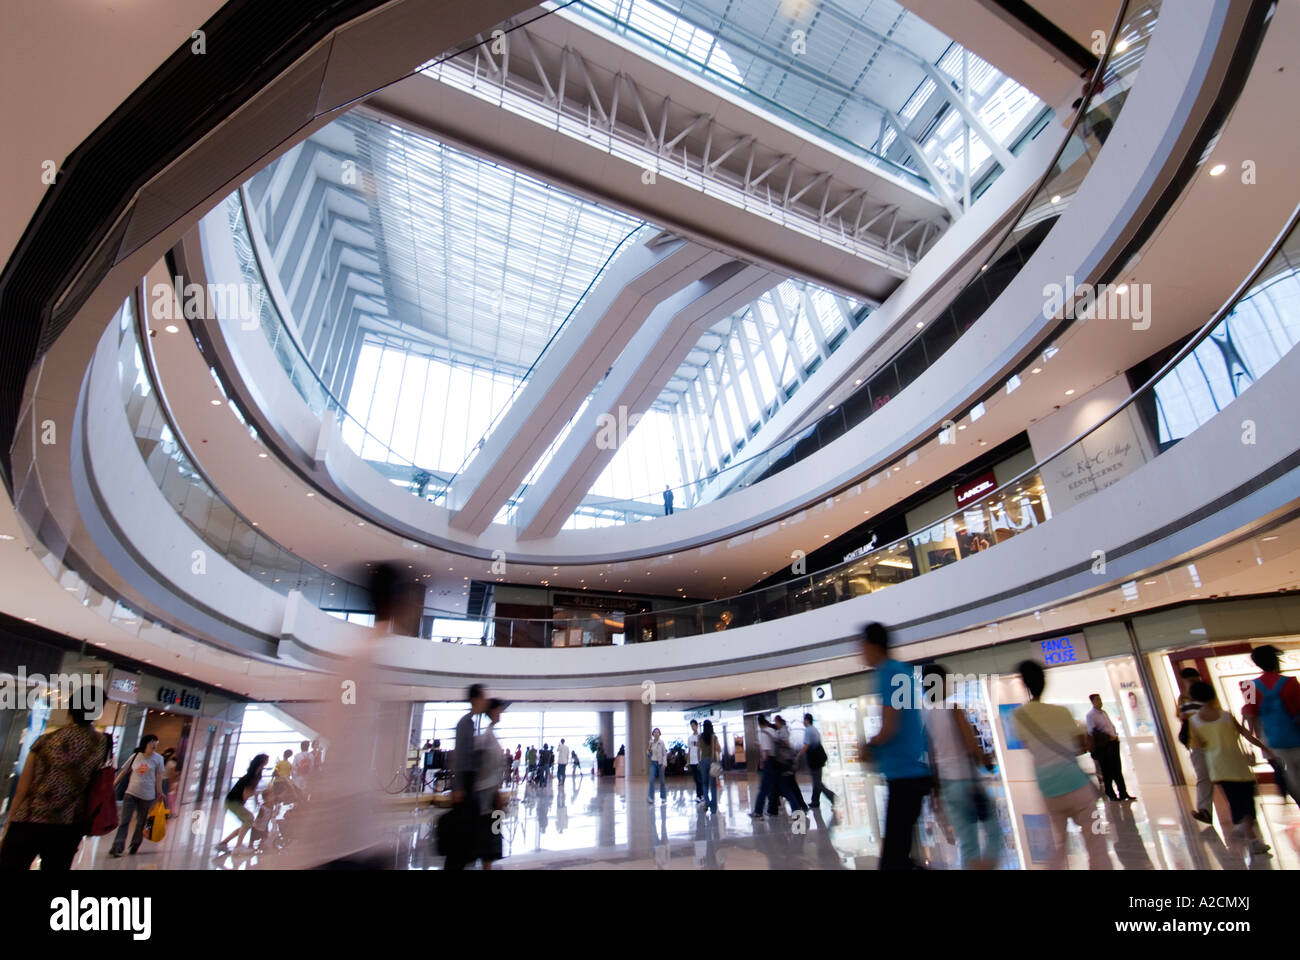 Interior of IFC shopping mall in Hong Kong Stock Photo